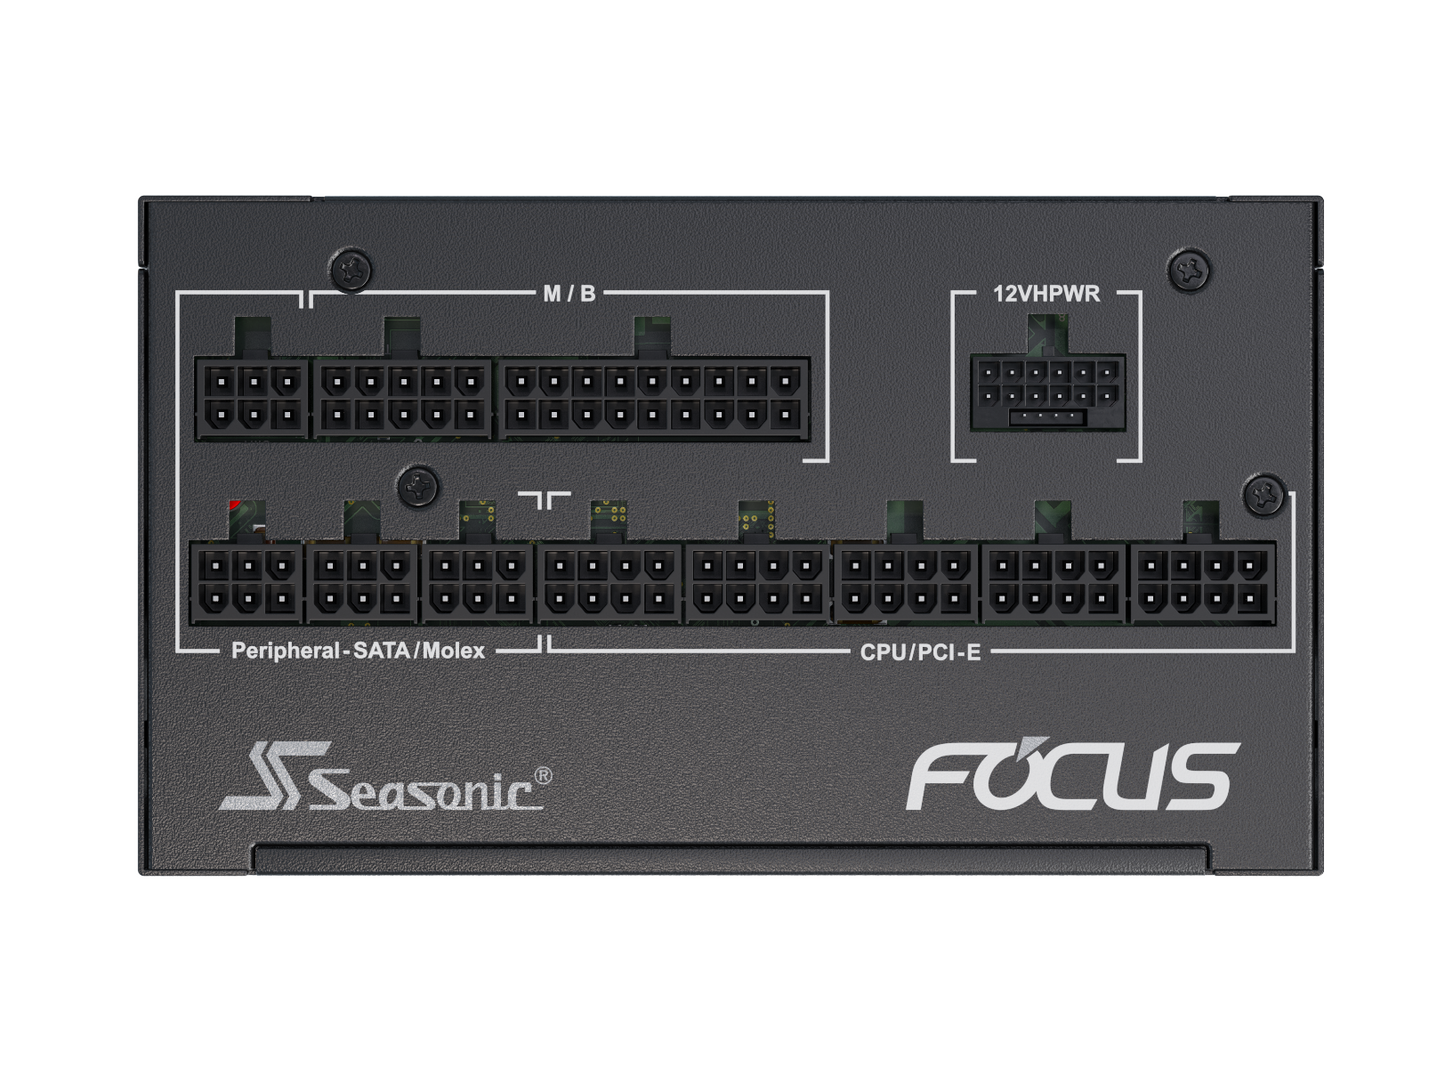 Seasonic FOCUS GX-850 ATX 3.0 850W Gold PSU (SSR-850FX3)